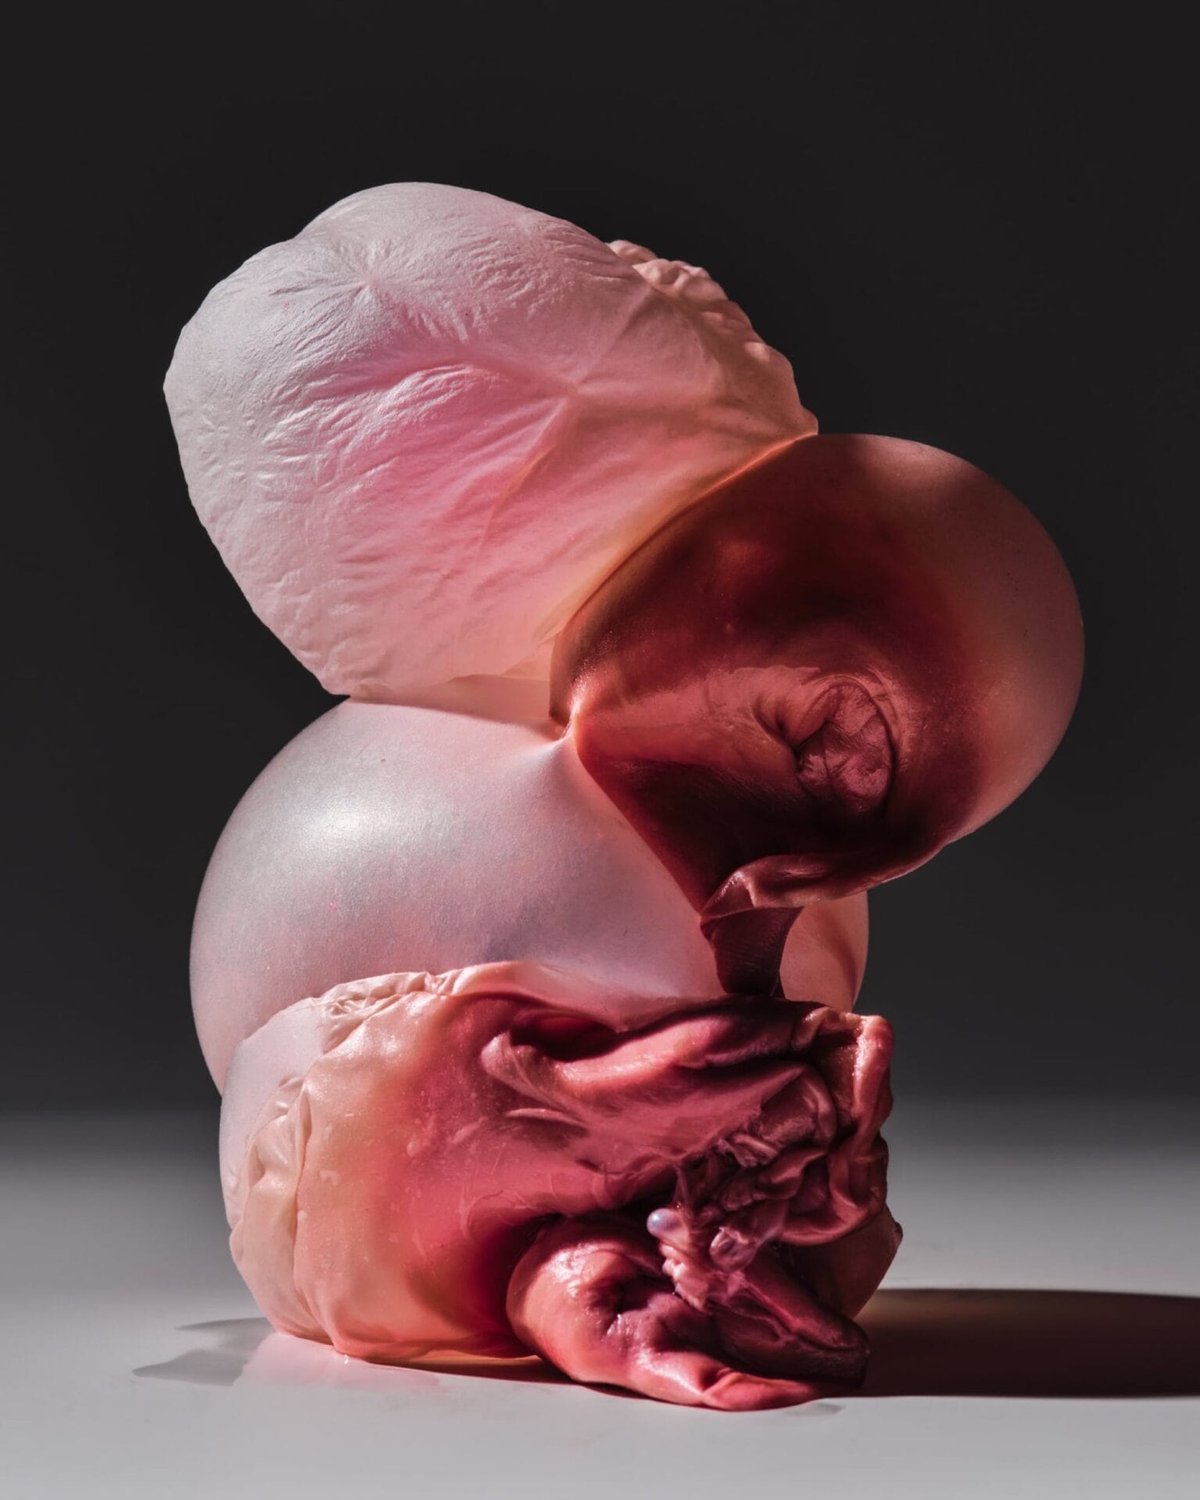 half-popped bubblegum that looks like mangled flesh